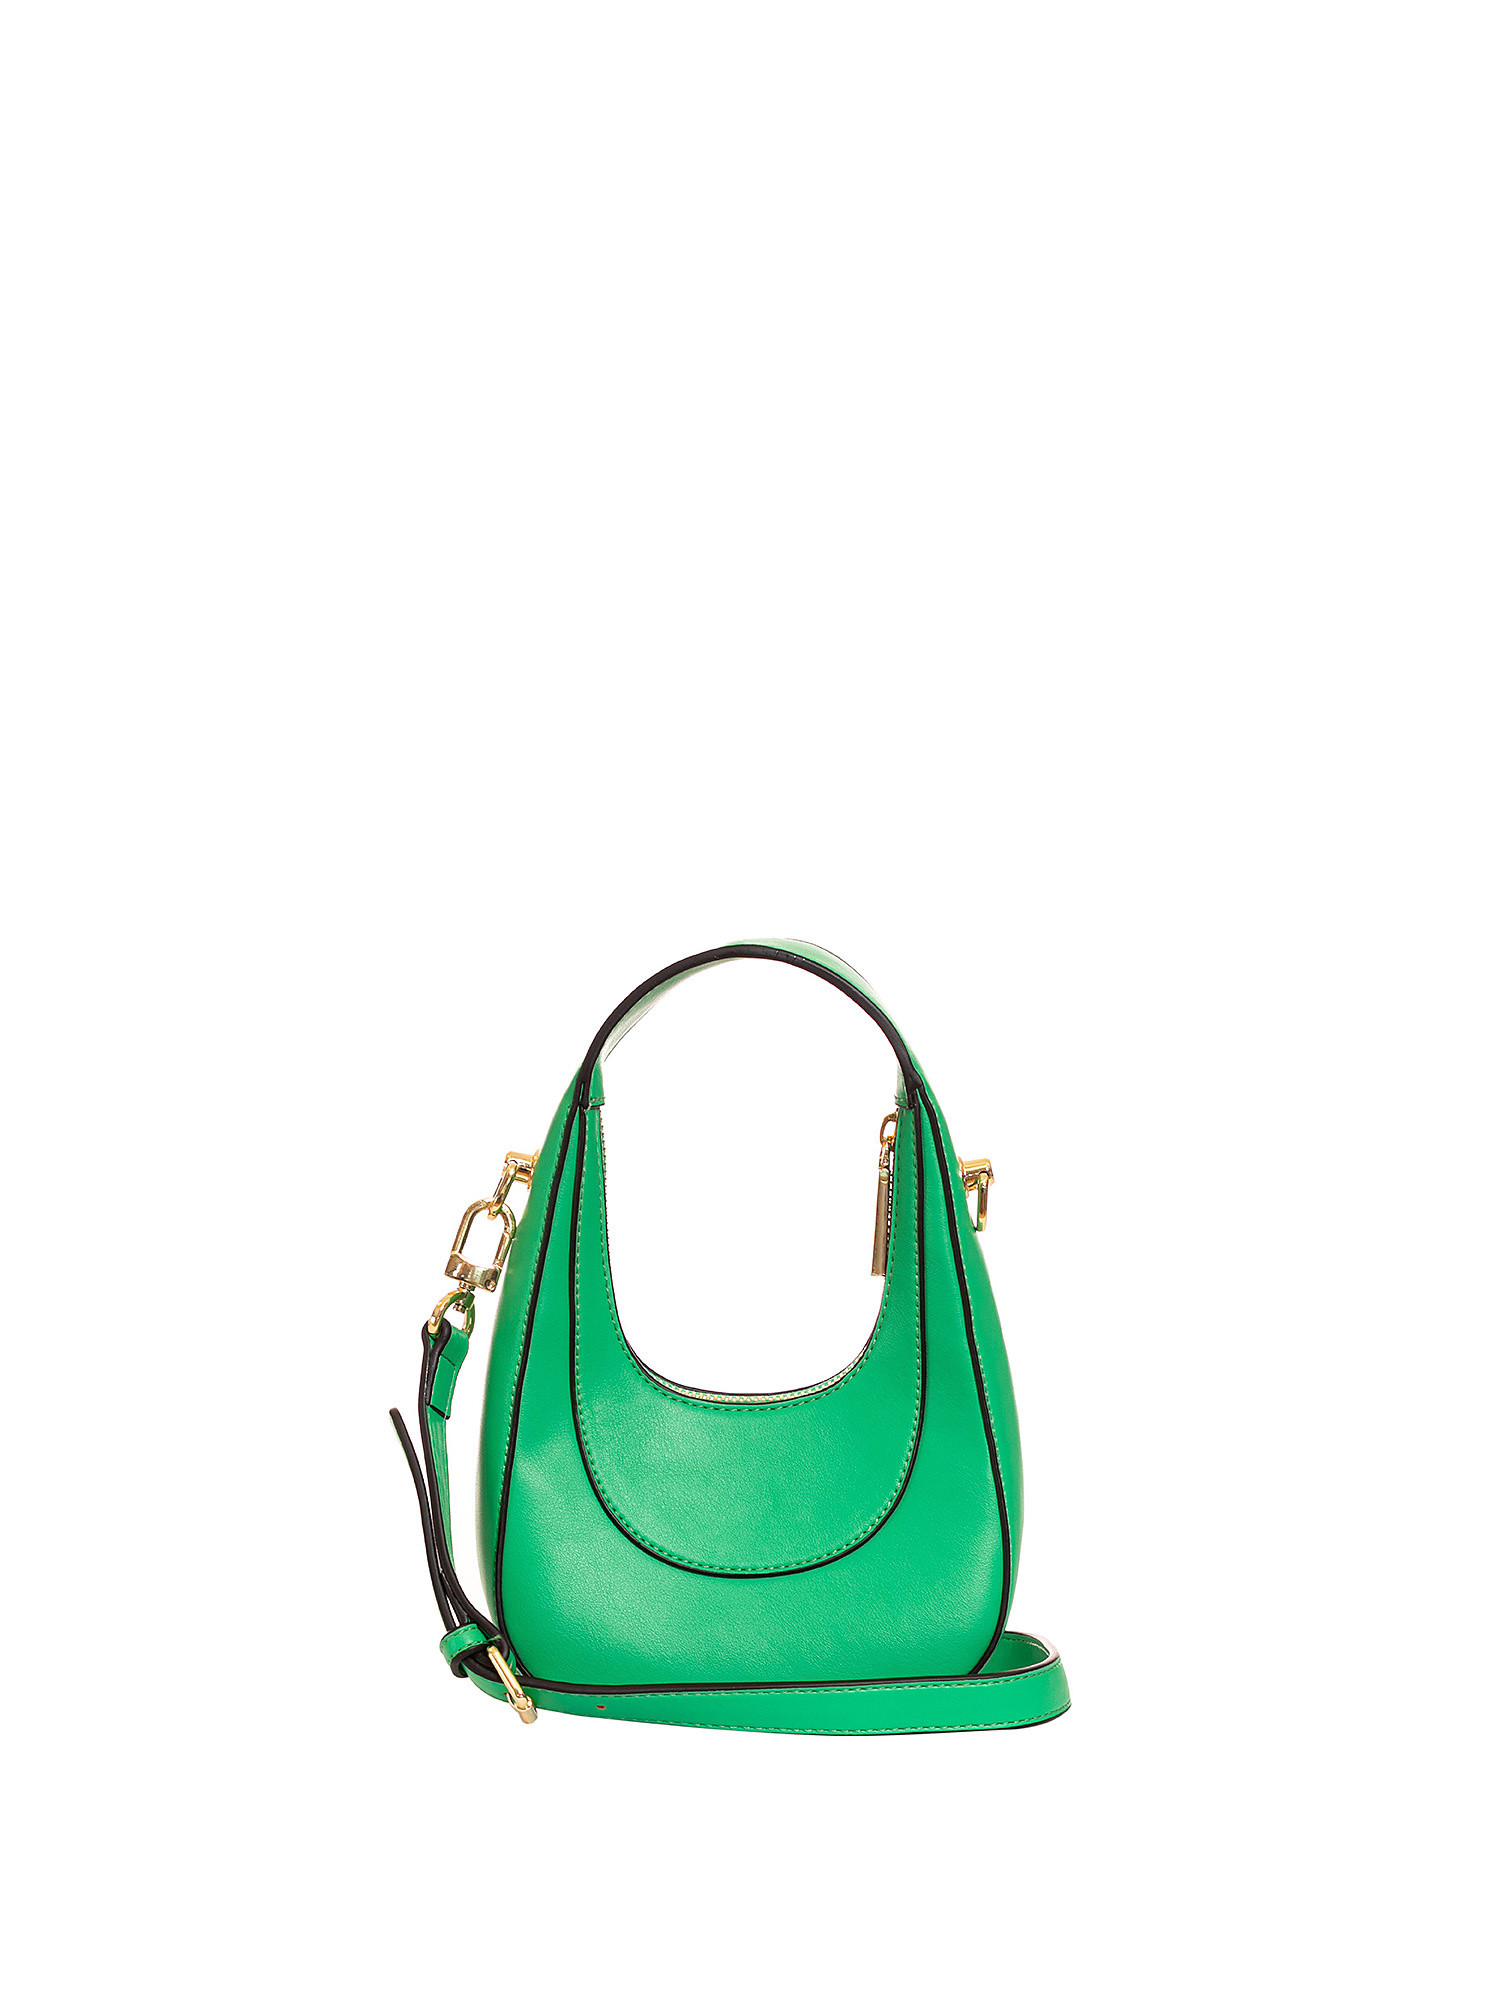 Chiara Ferragni - Range G golden eye star bag, Green, large image number 0